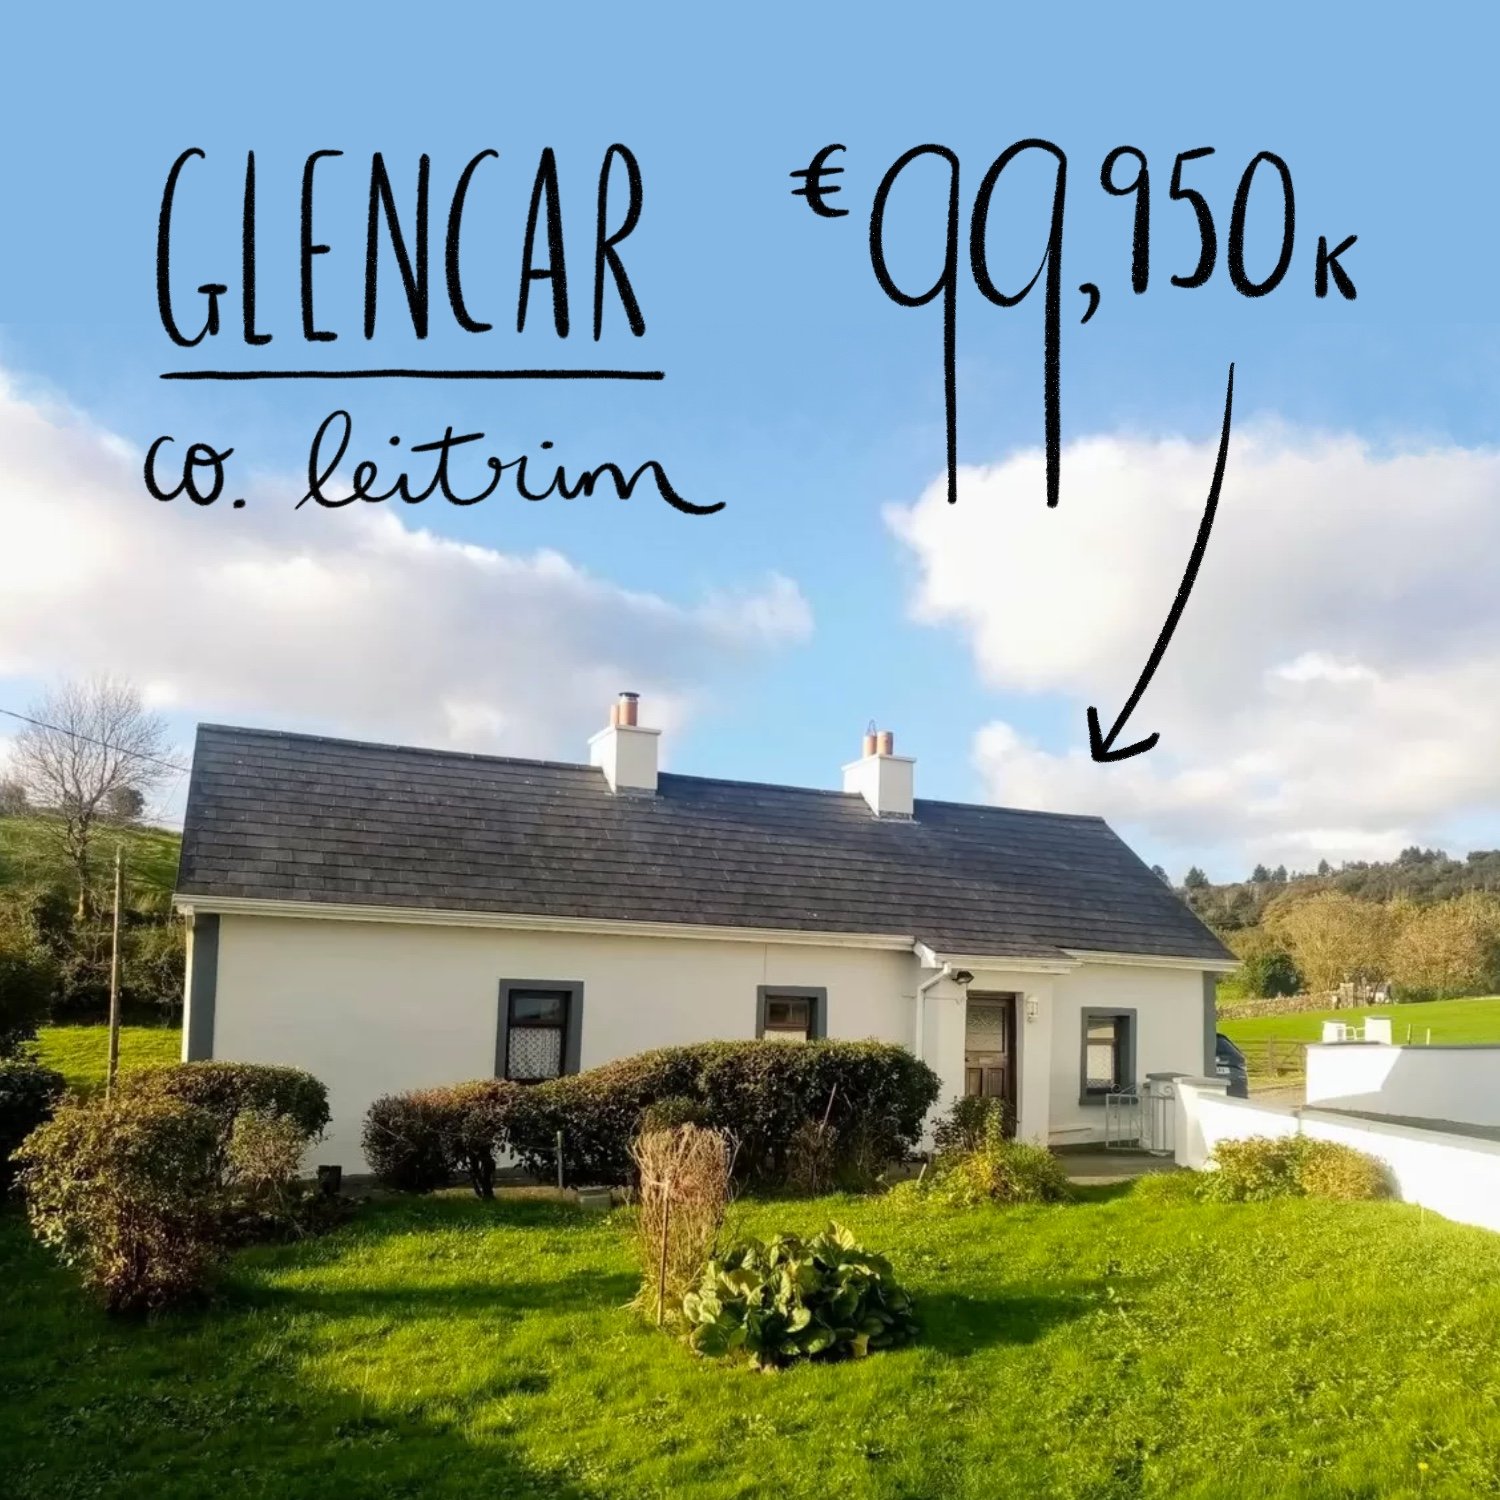 Shancurragh, Glencar, Co. Leitrim. €99,950